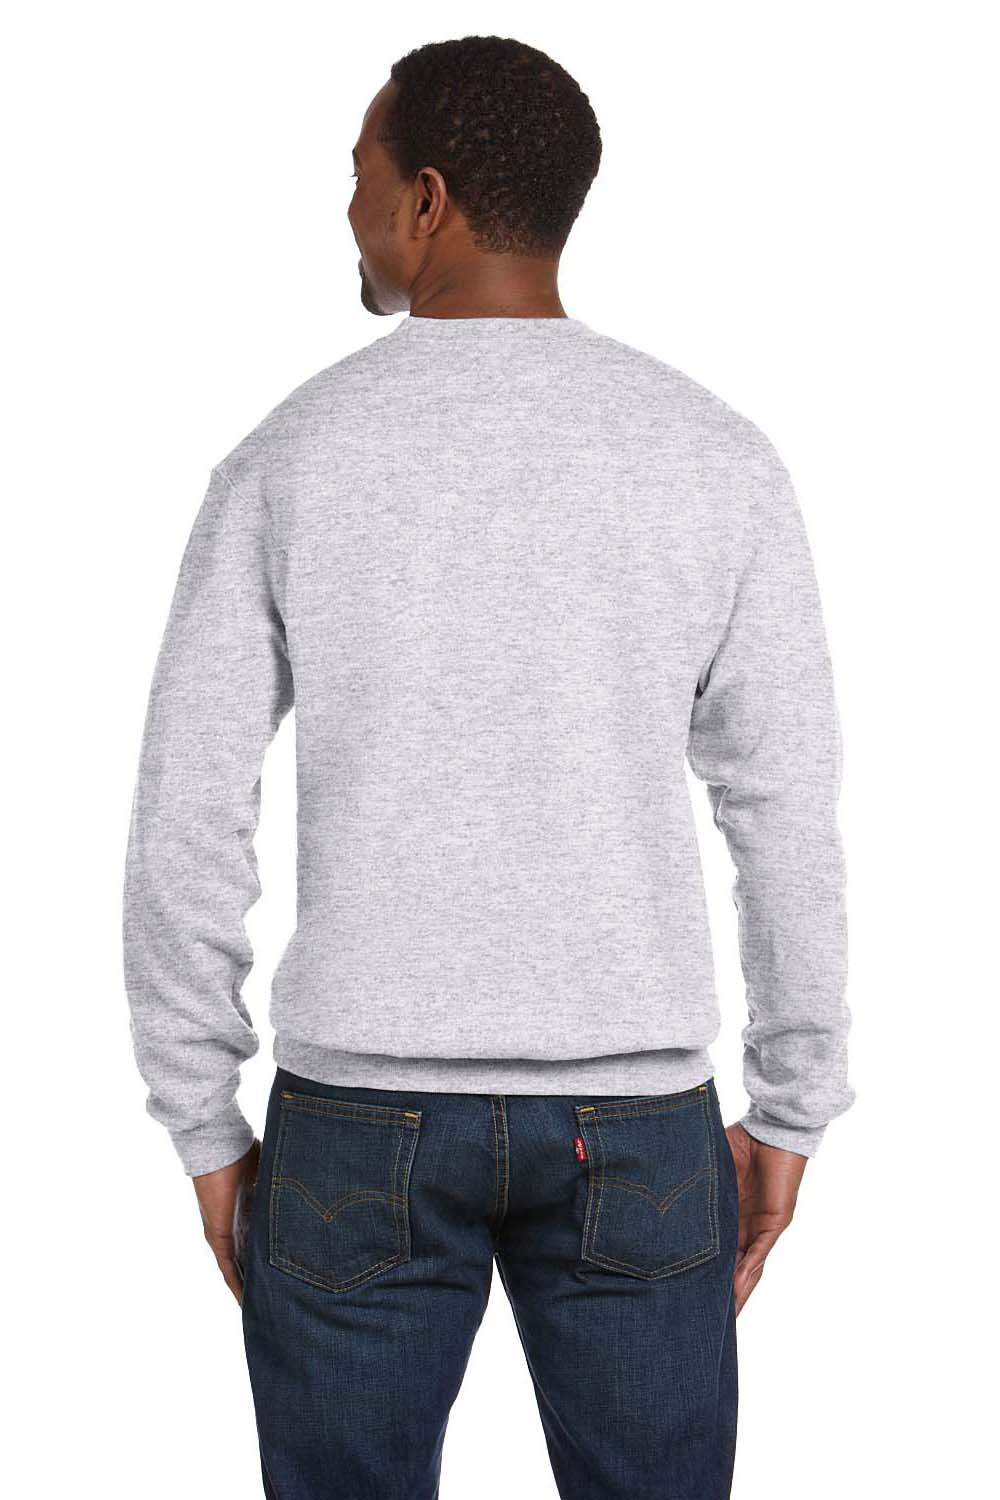 Port & Company Ash Grey Ultimate Crewneck Sweatshirt